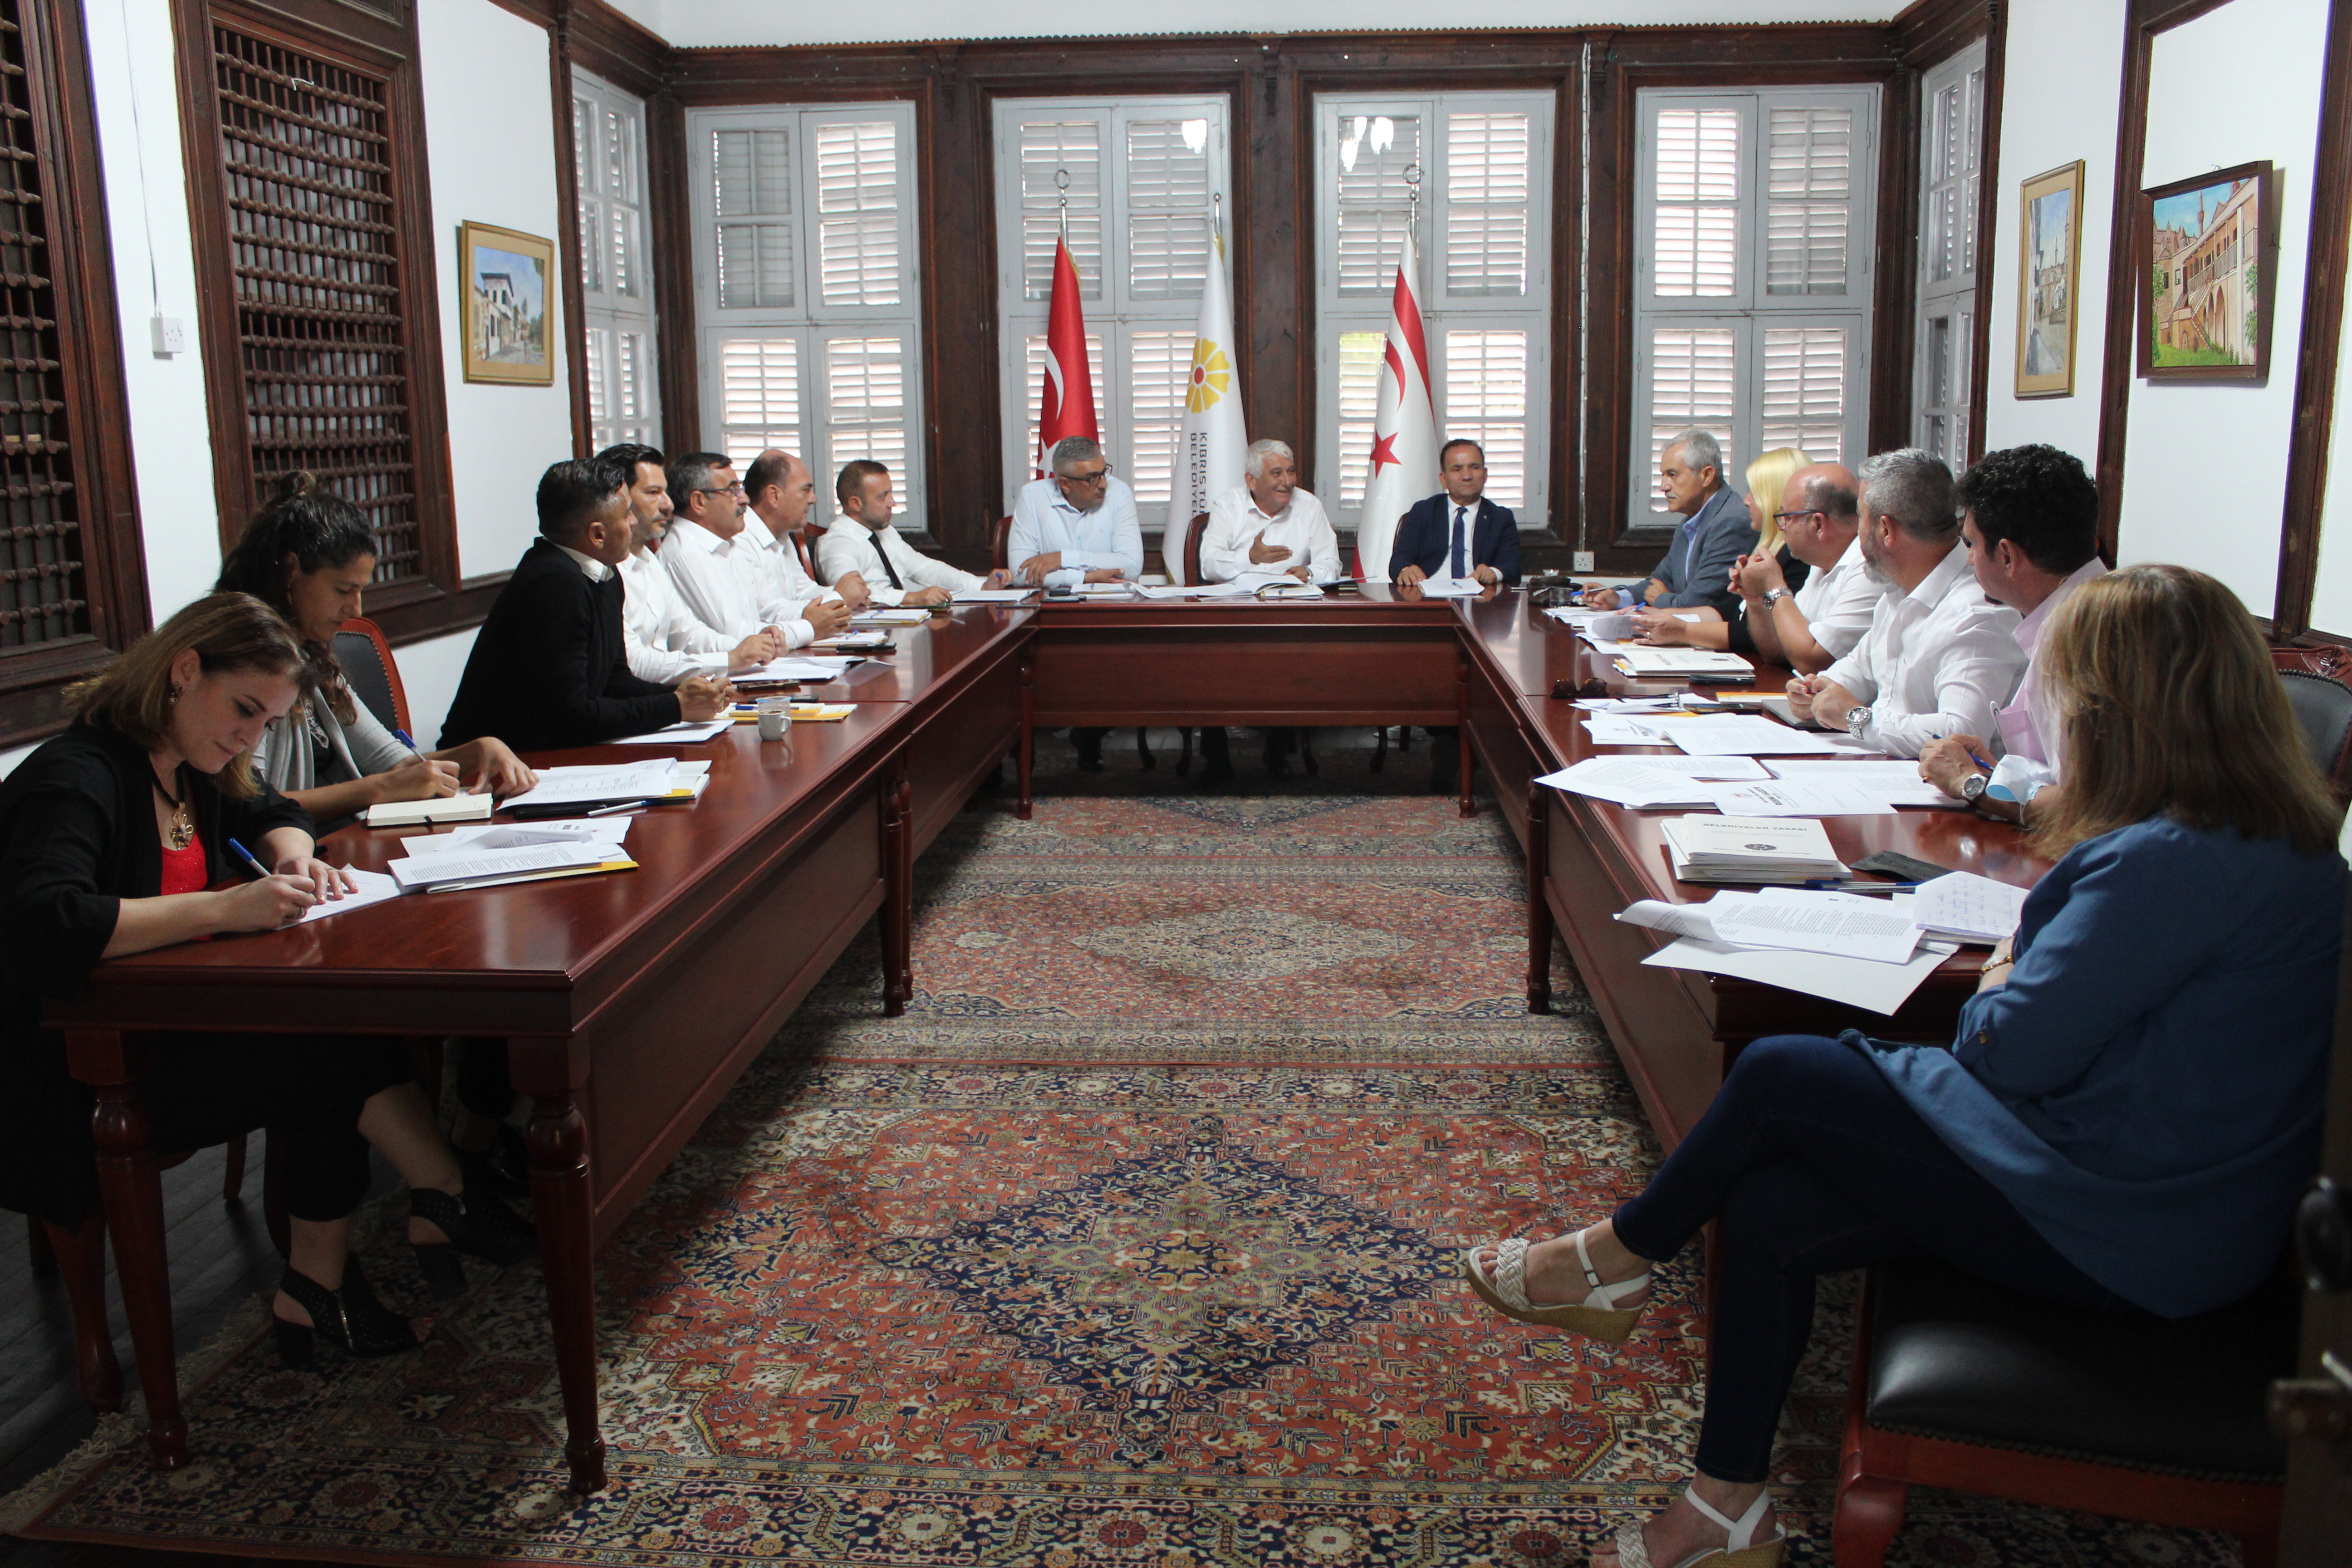 Mayors held a meeting regarding Zoning Authorization